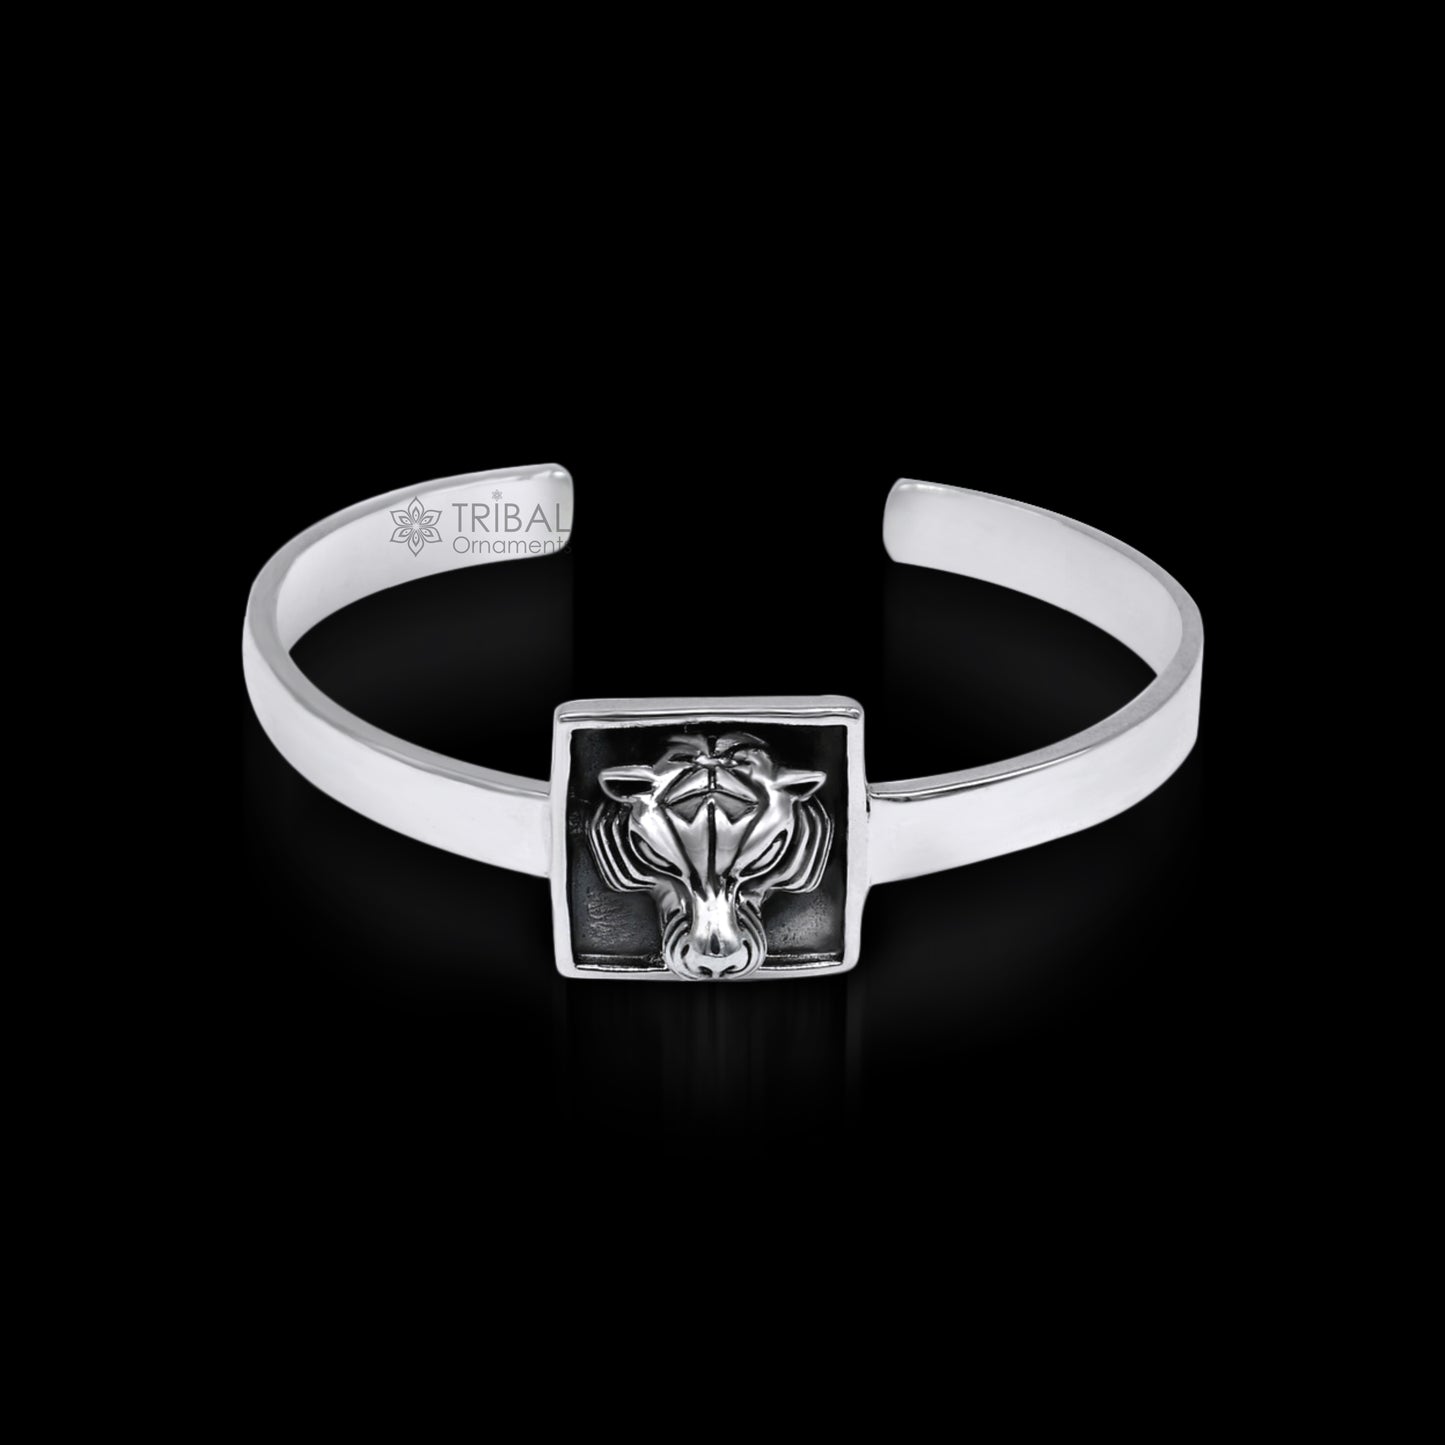 925 sterling silver handmade lion face design adjustable bangle cuff bracelet kada, best unisex gifting ethnic jewelry india nsk368